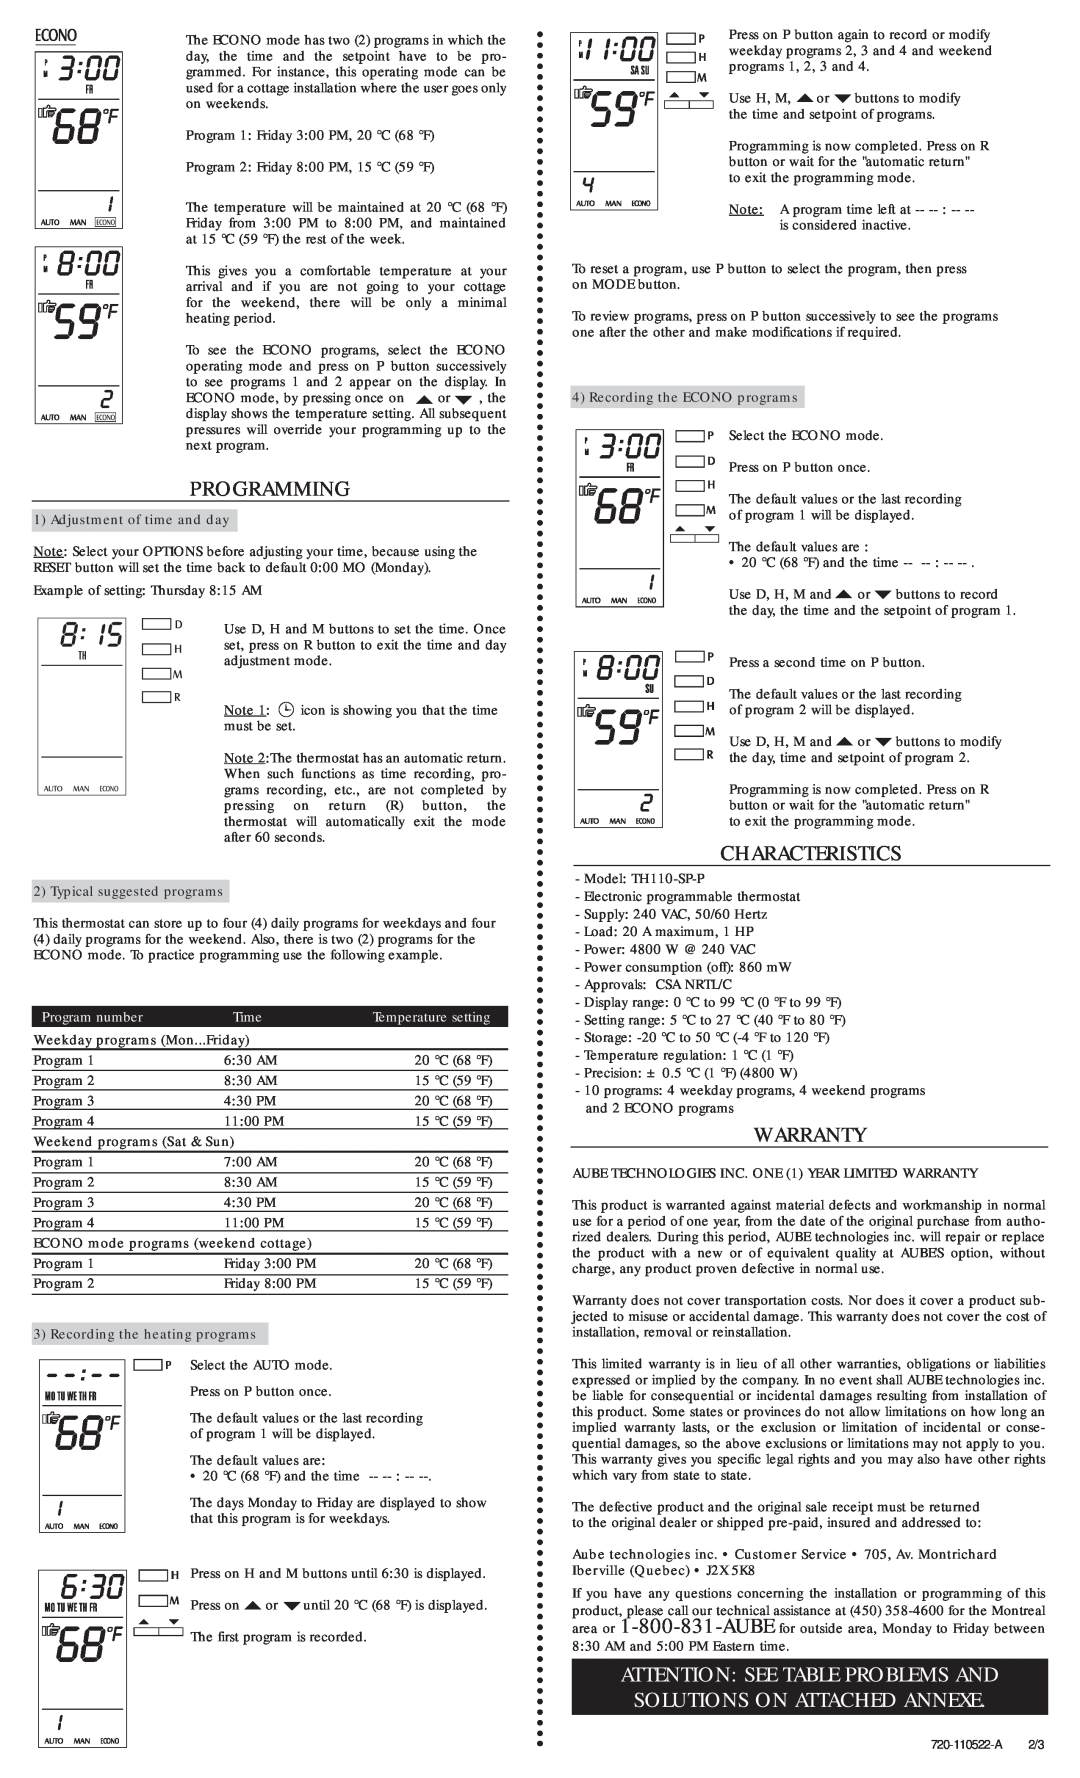 Aube Technologies TH110-SP-P manual Programming, Characteristics, Warranty, Program number, Time, Temperature setting 